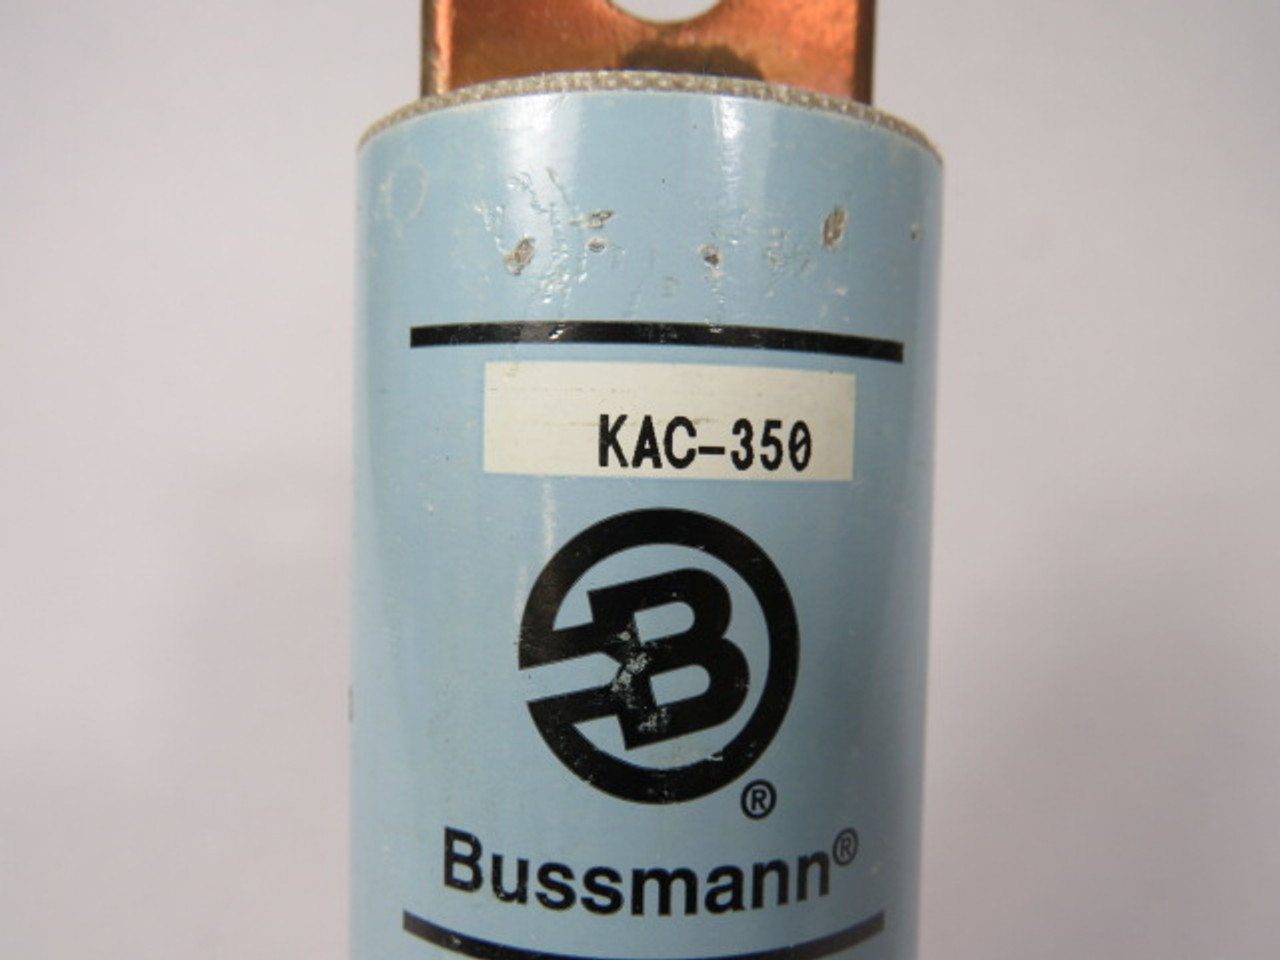 Bussmann KAC-350 Rectifier Fuse 350A 600V USED